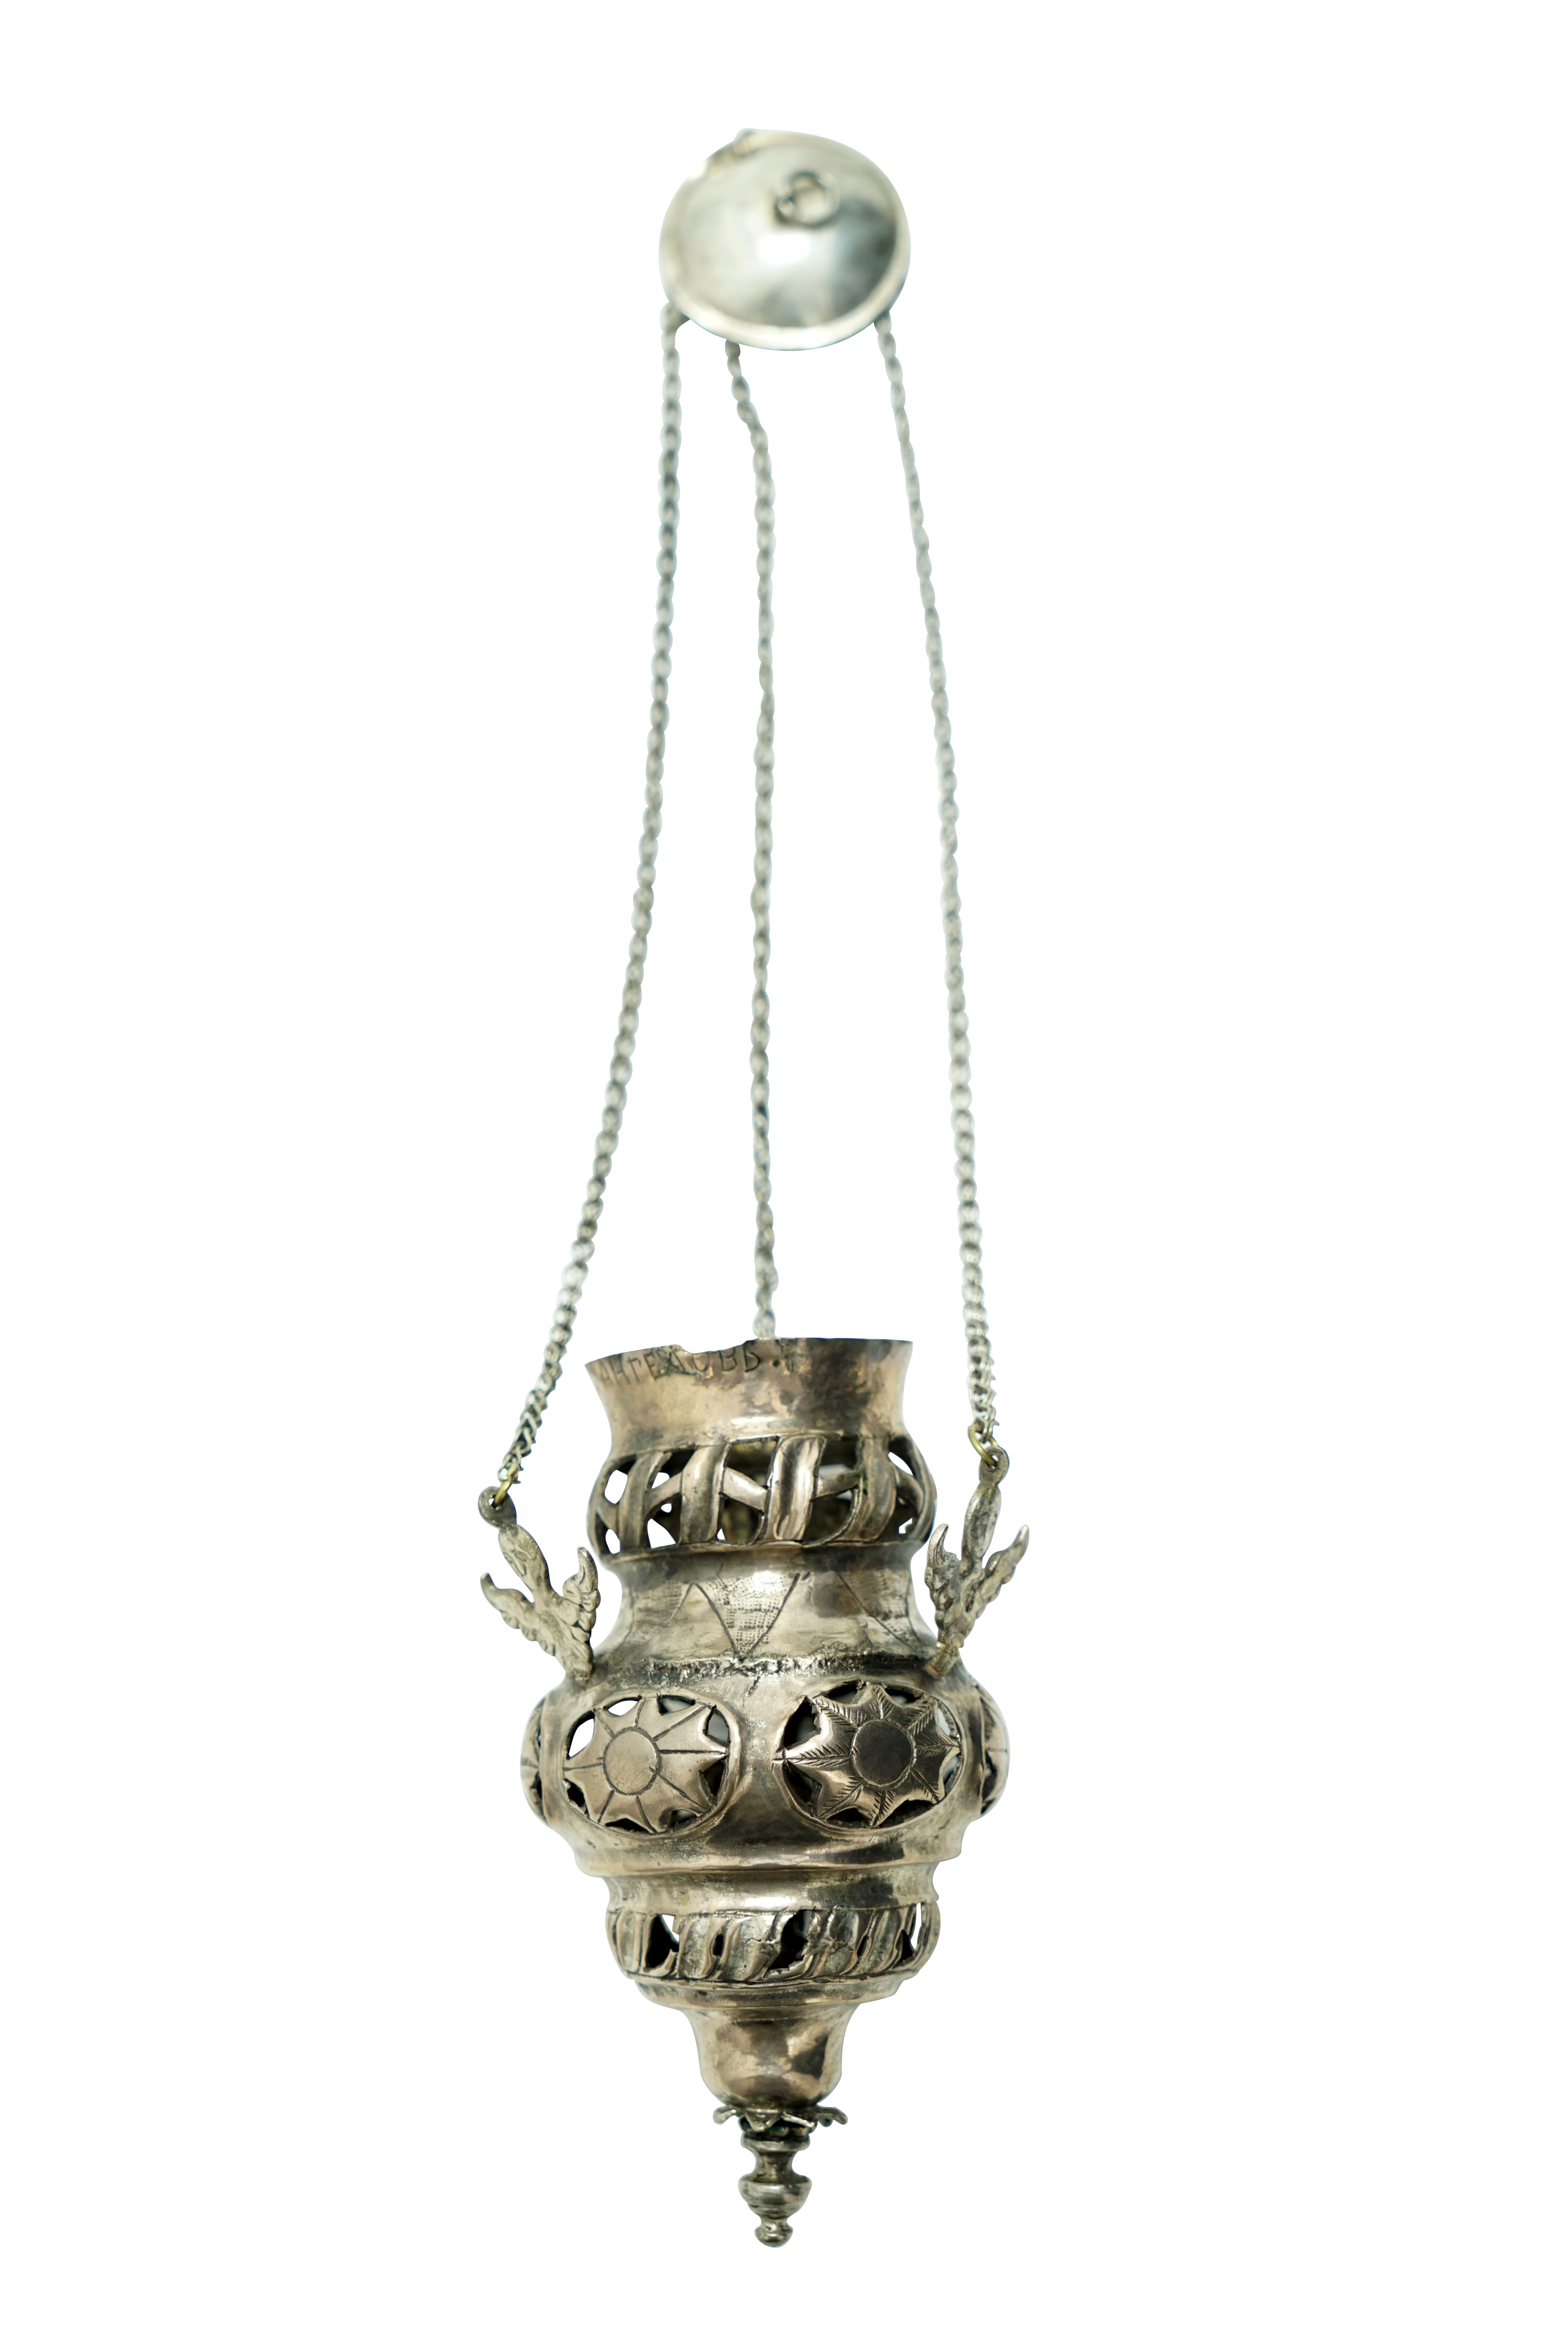 A 19th century silver ceiling candelabra